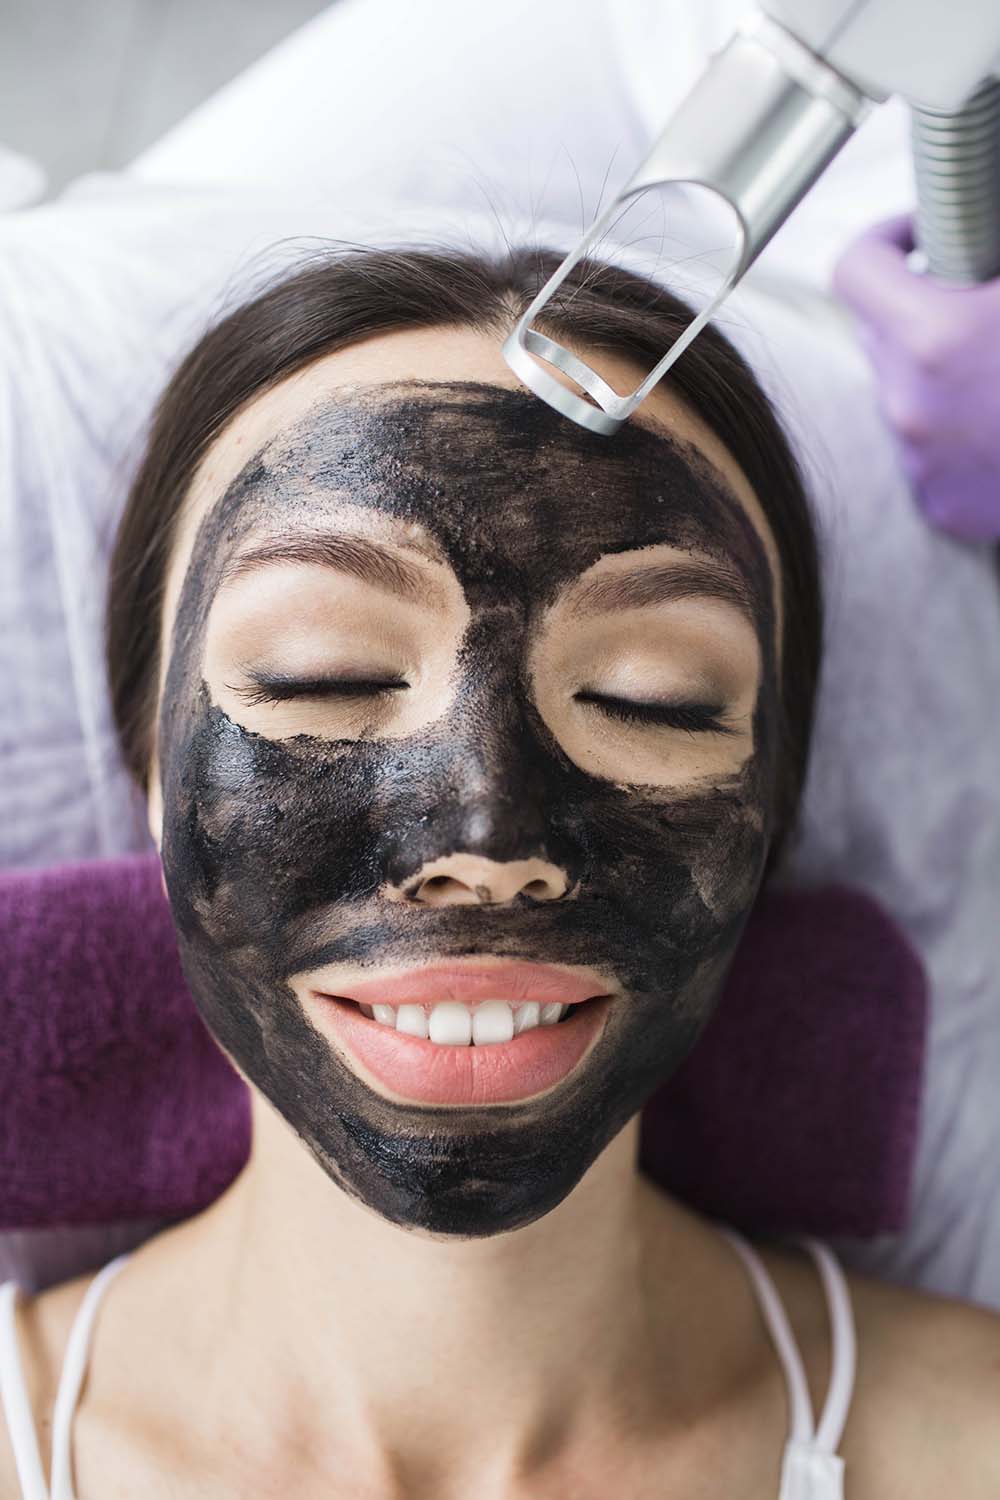 Cute asian woman gets a face peeling procedure in a beauty salon. Skin care